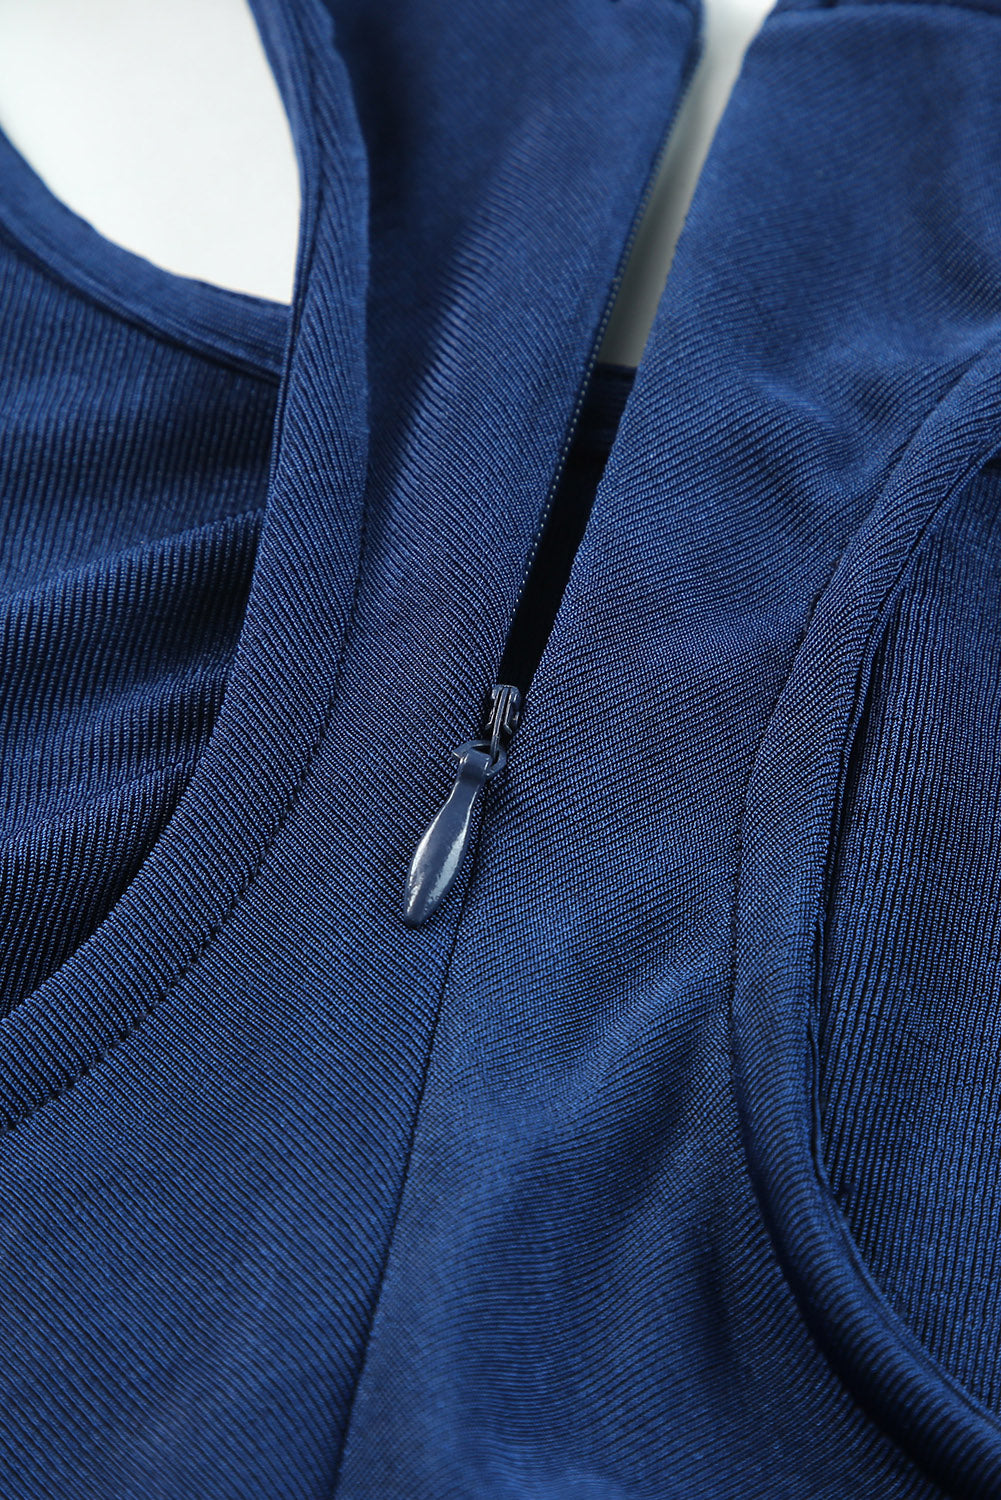 Modra dirkaška pletena midi obleka z naborki